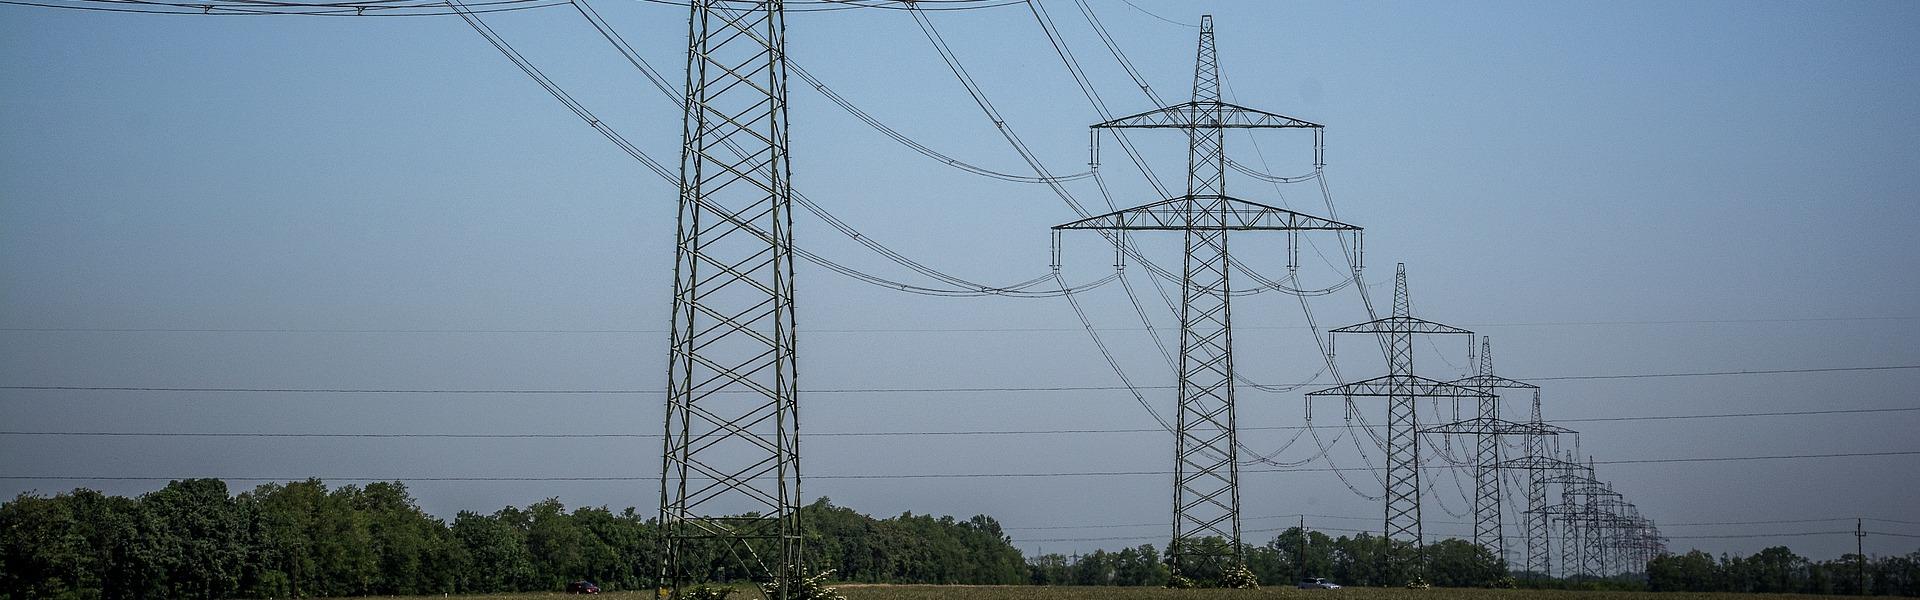 Power lines in a field.